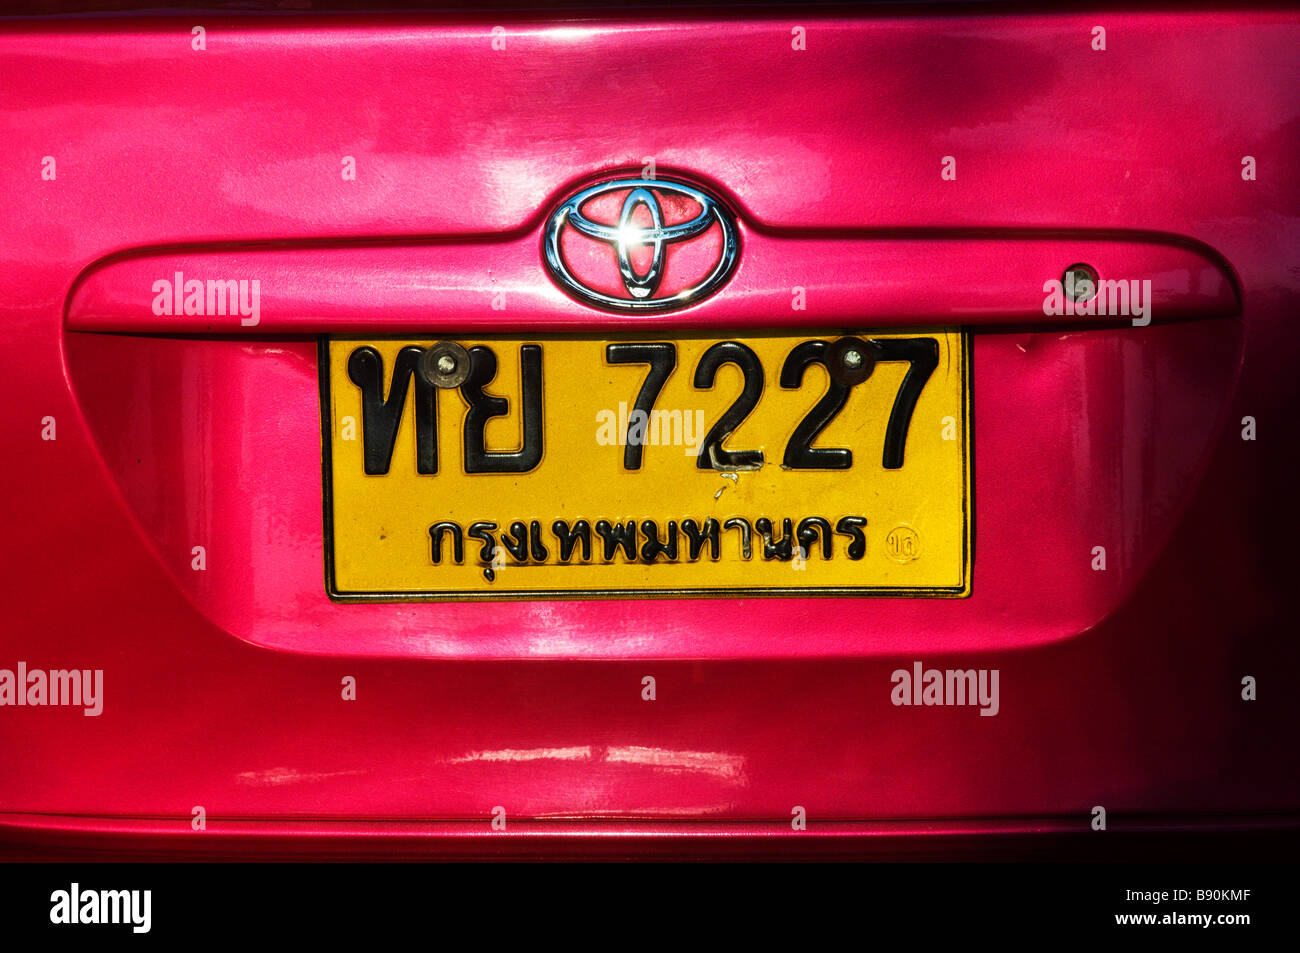 Number plate of Bangkok taxi Stock Photo